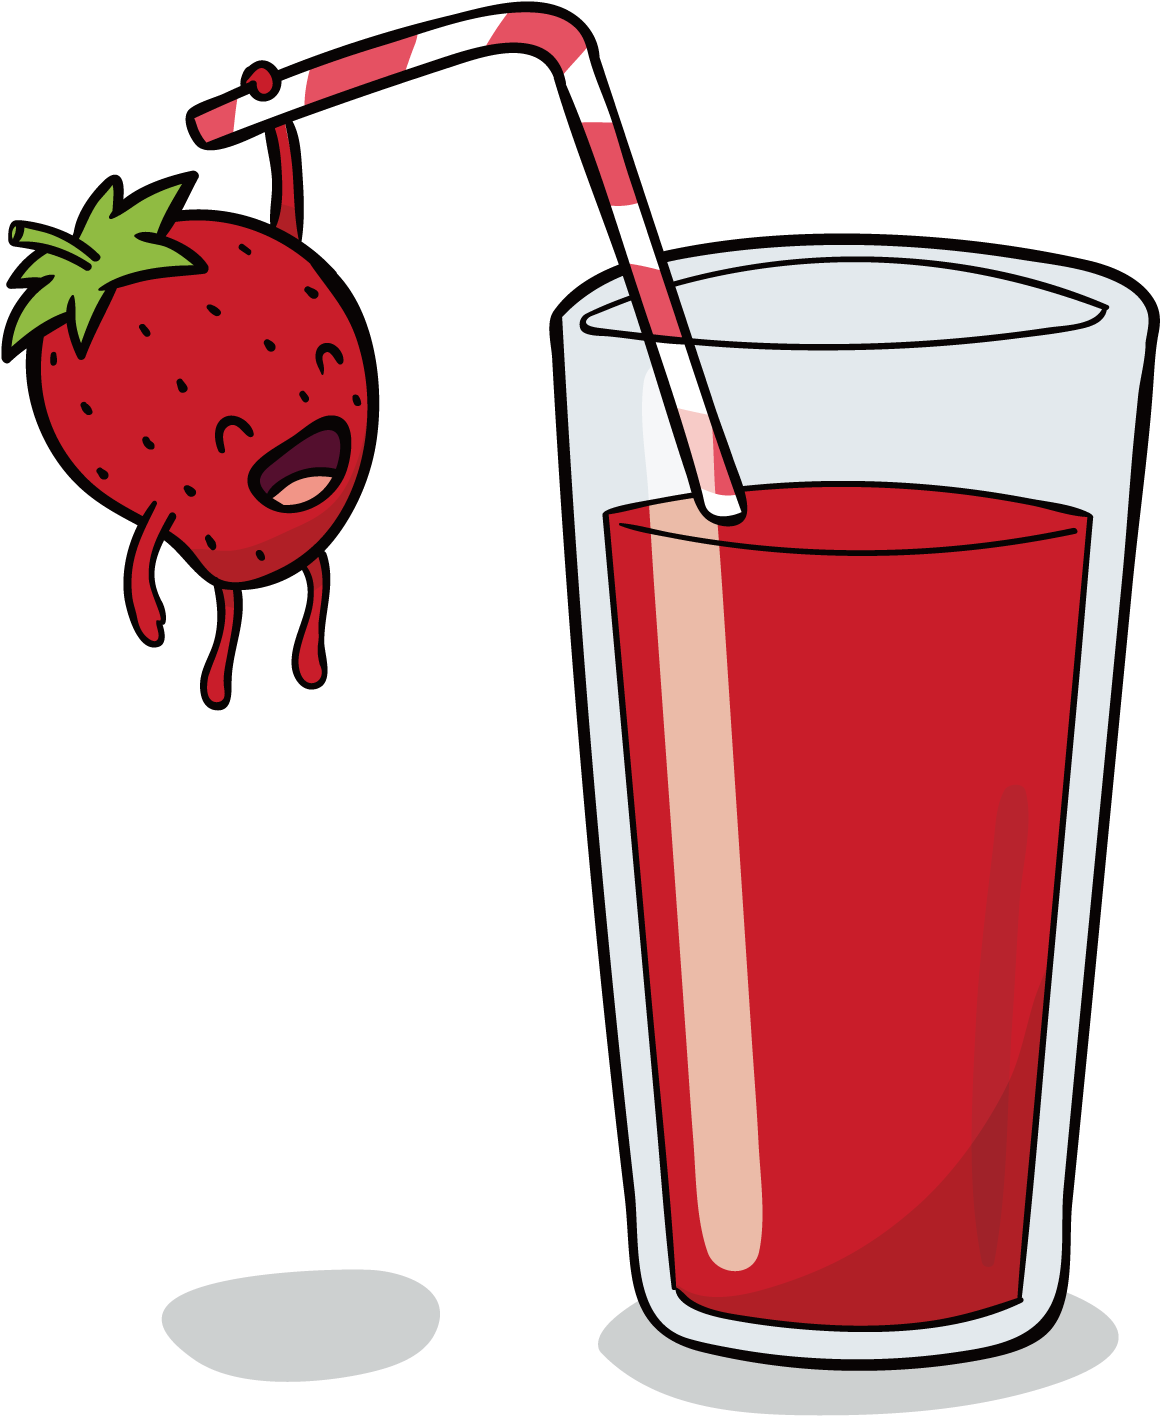 Orange Juice Smoothie Pomegranate Juice Strawberry - น้ำ ผล ไม้ วาด (1500x1500), Png Download